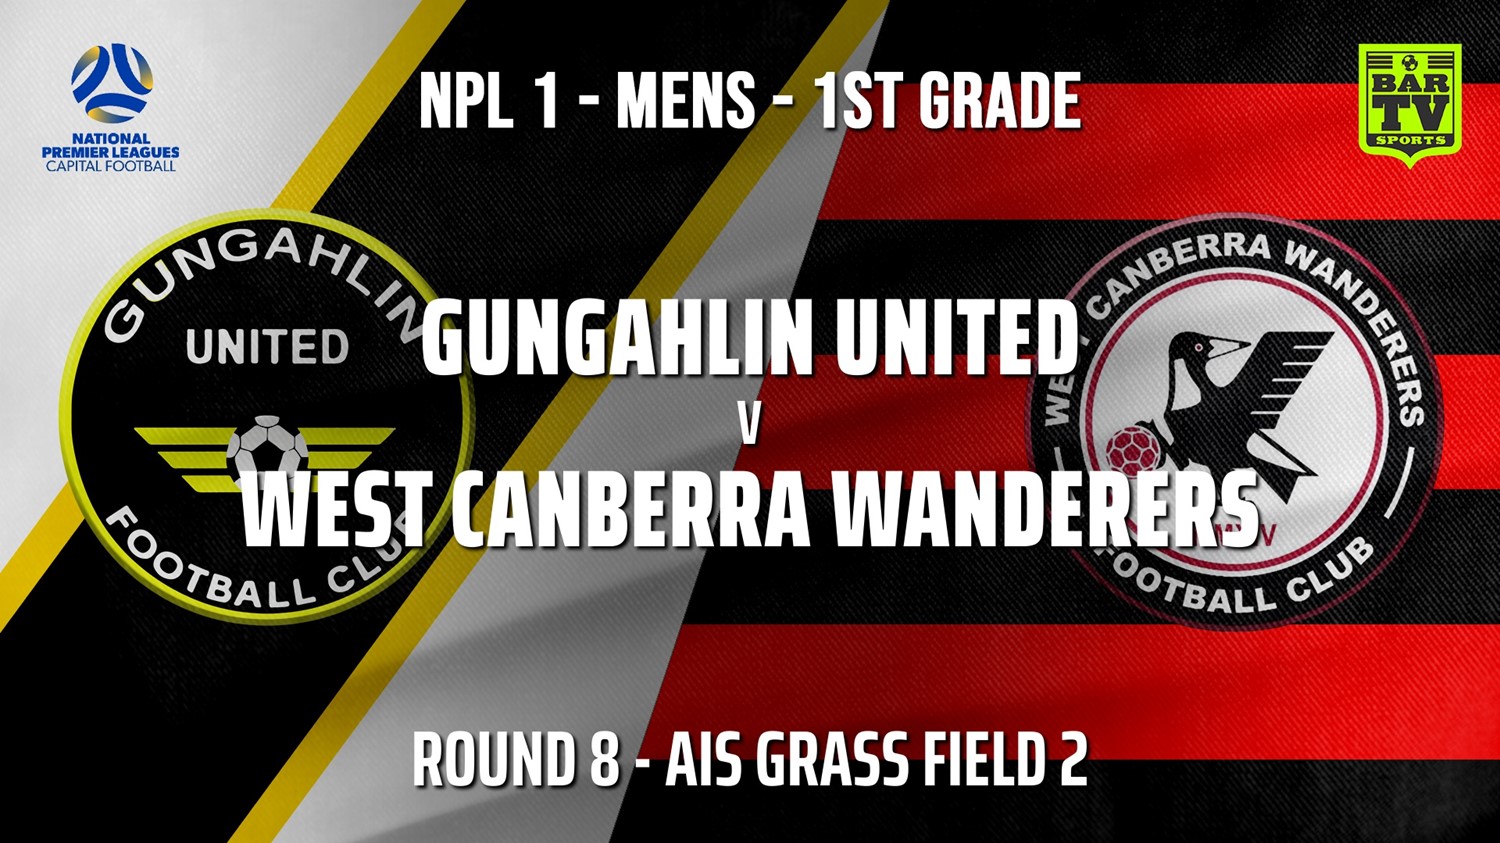 210530-NPL - CAPITAL Round 8 - Gungahlin United FC v West Canberra Wanderers Minigame Slate Image